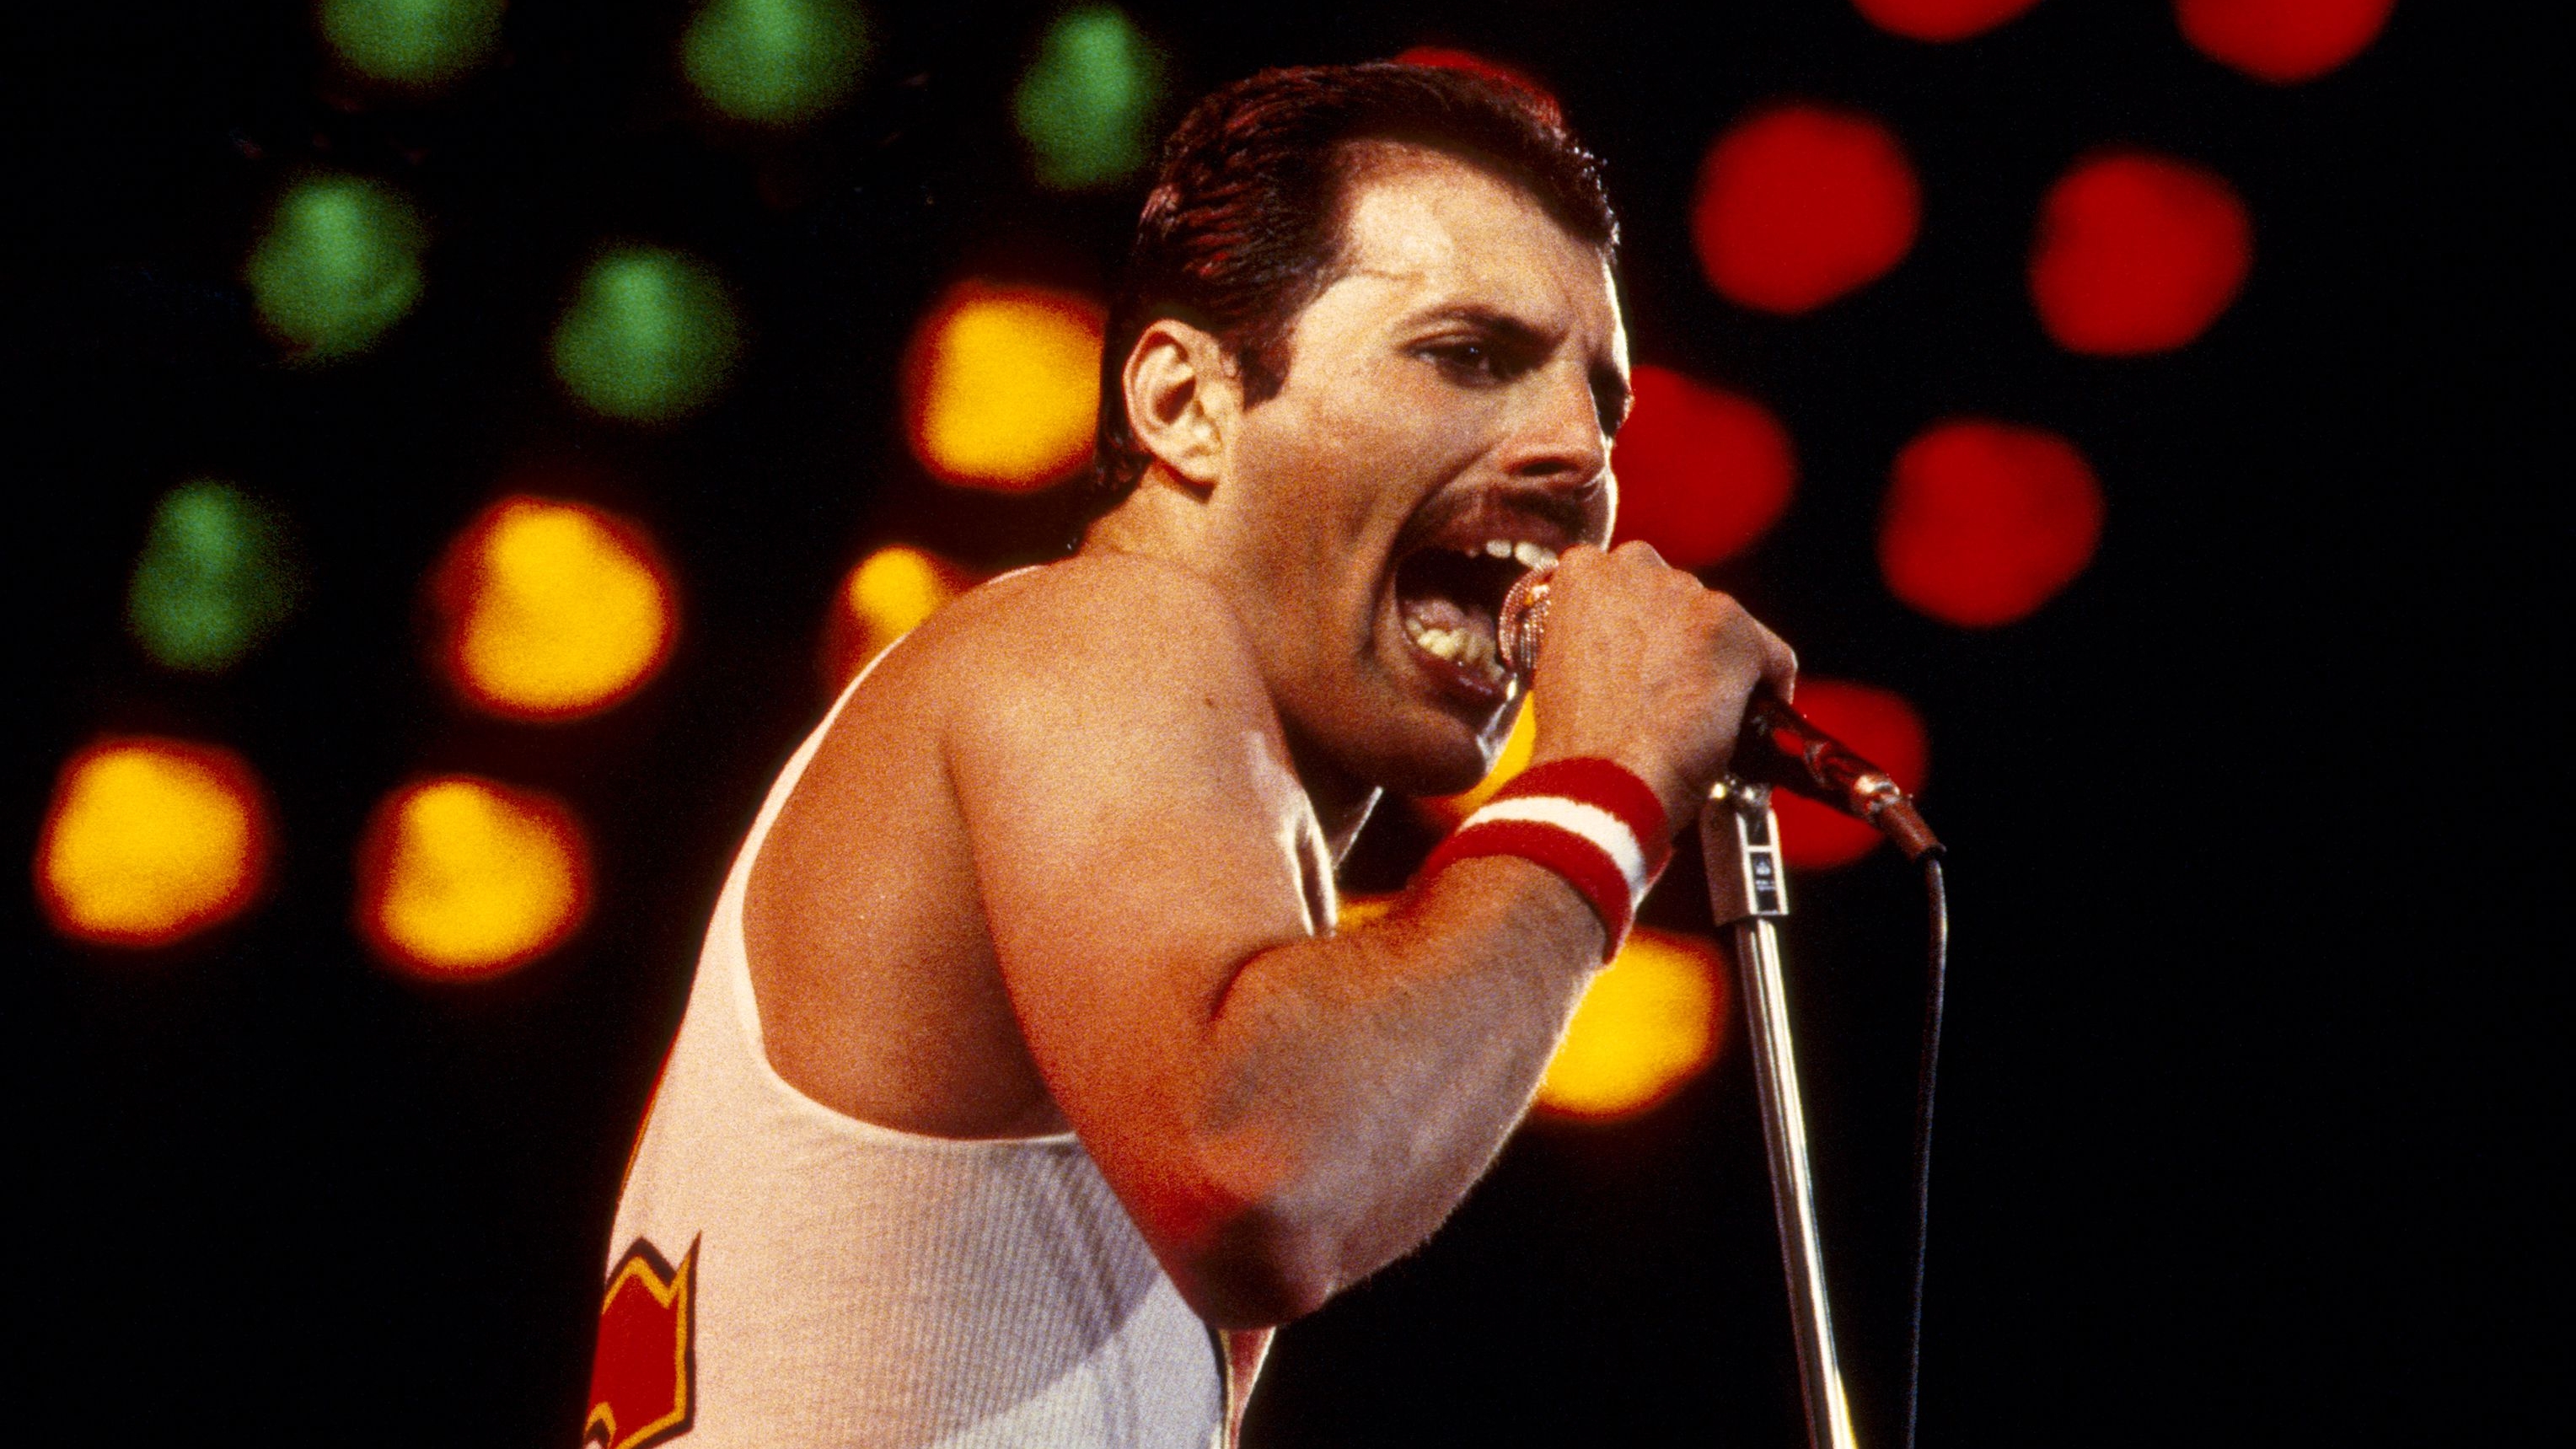 Mandatory Credit: Photo by Graham Wiltshire/Shutterstock (2181046c)
Queen - Freddie Mercury in concert, the Milton Keynes Bowl, Britain
Various